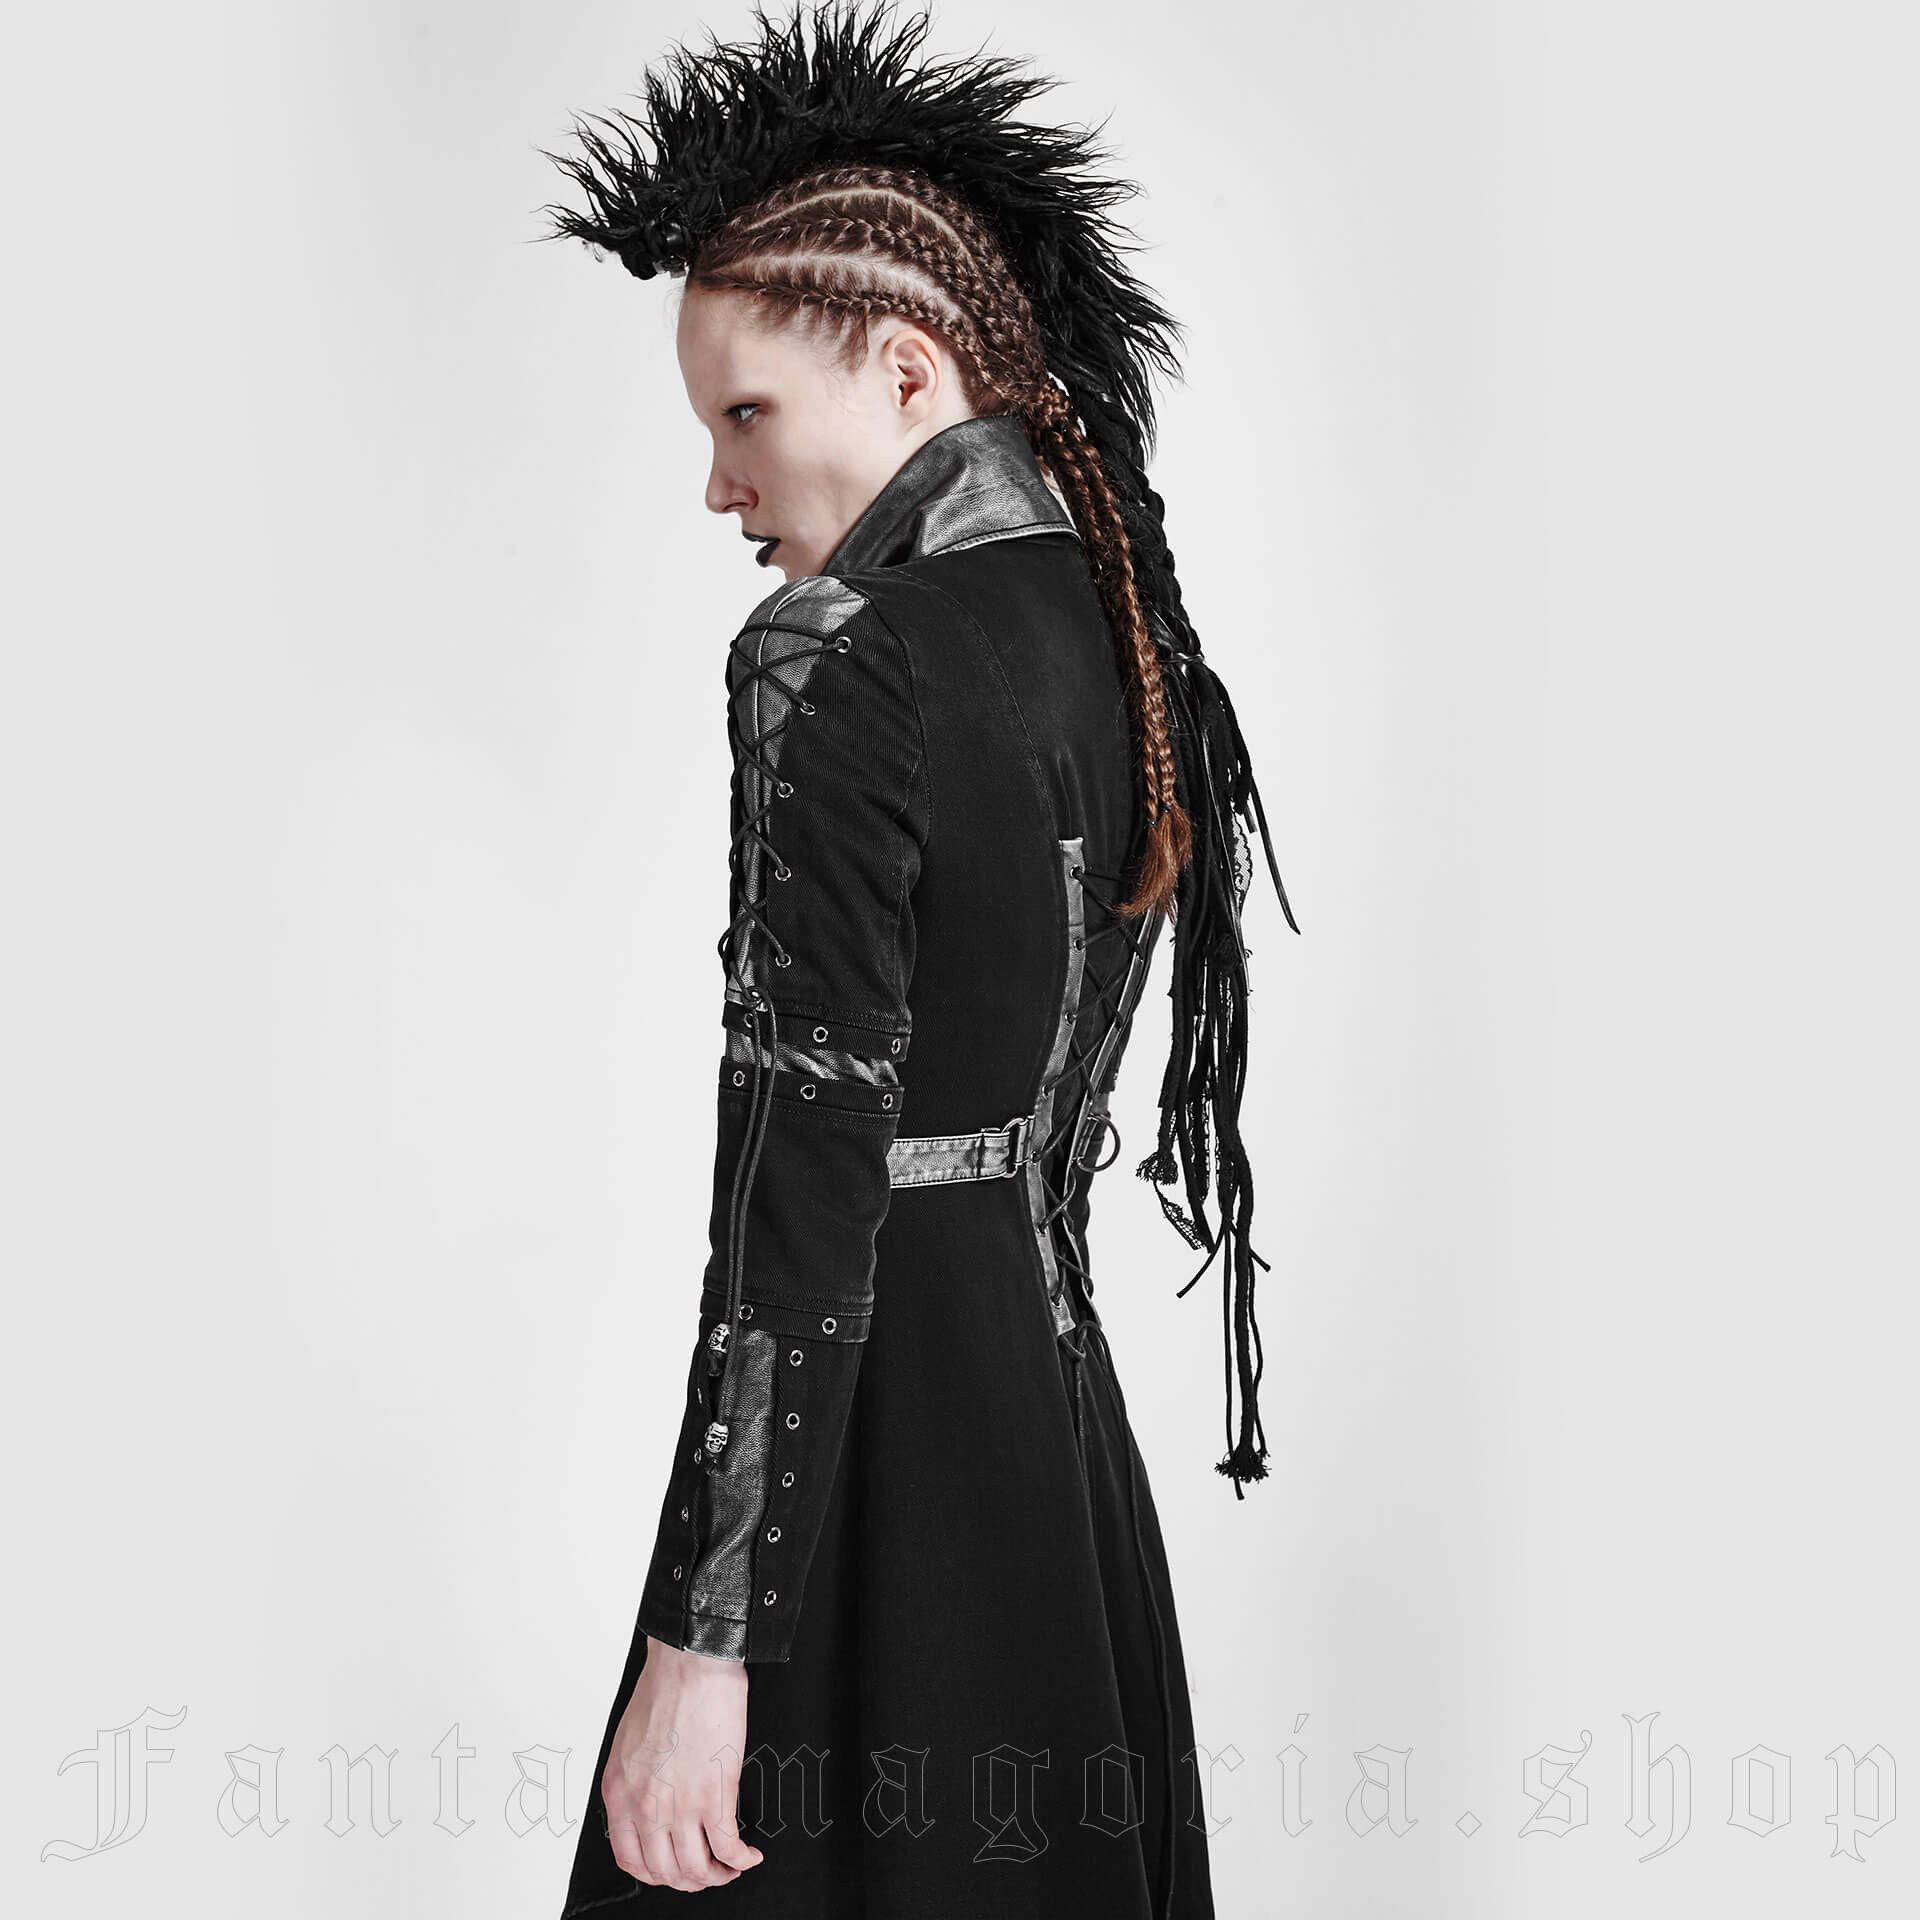 Stylish Black Hooded Gothic Coat, Apocalyptic, Witch, Cyberpunk Punk Rave  WY-964